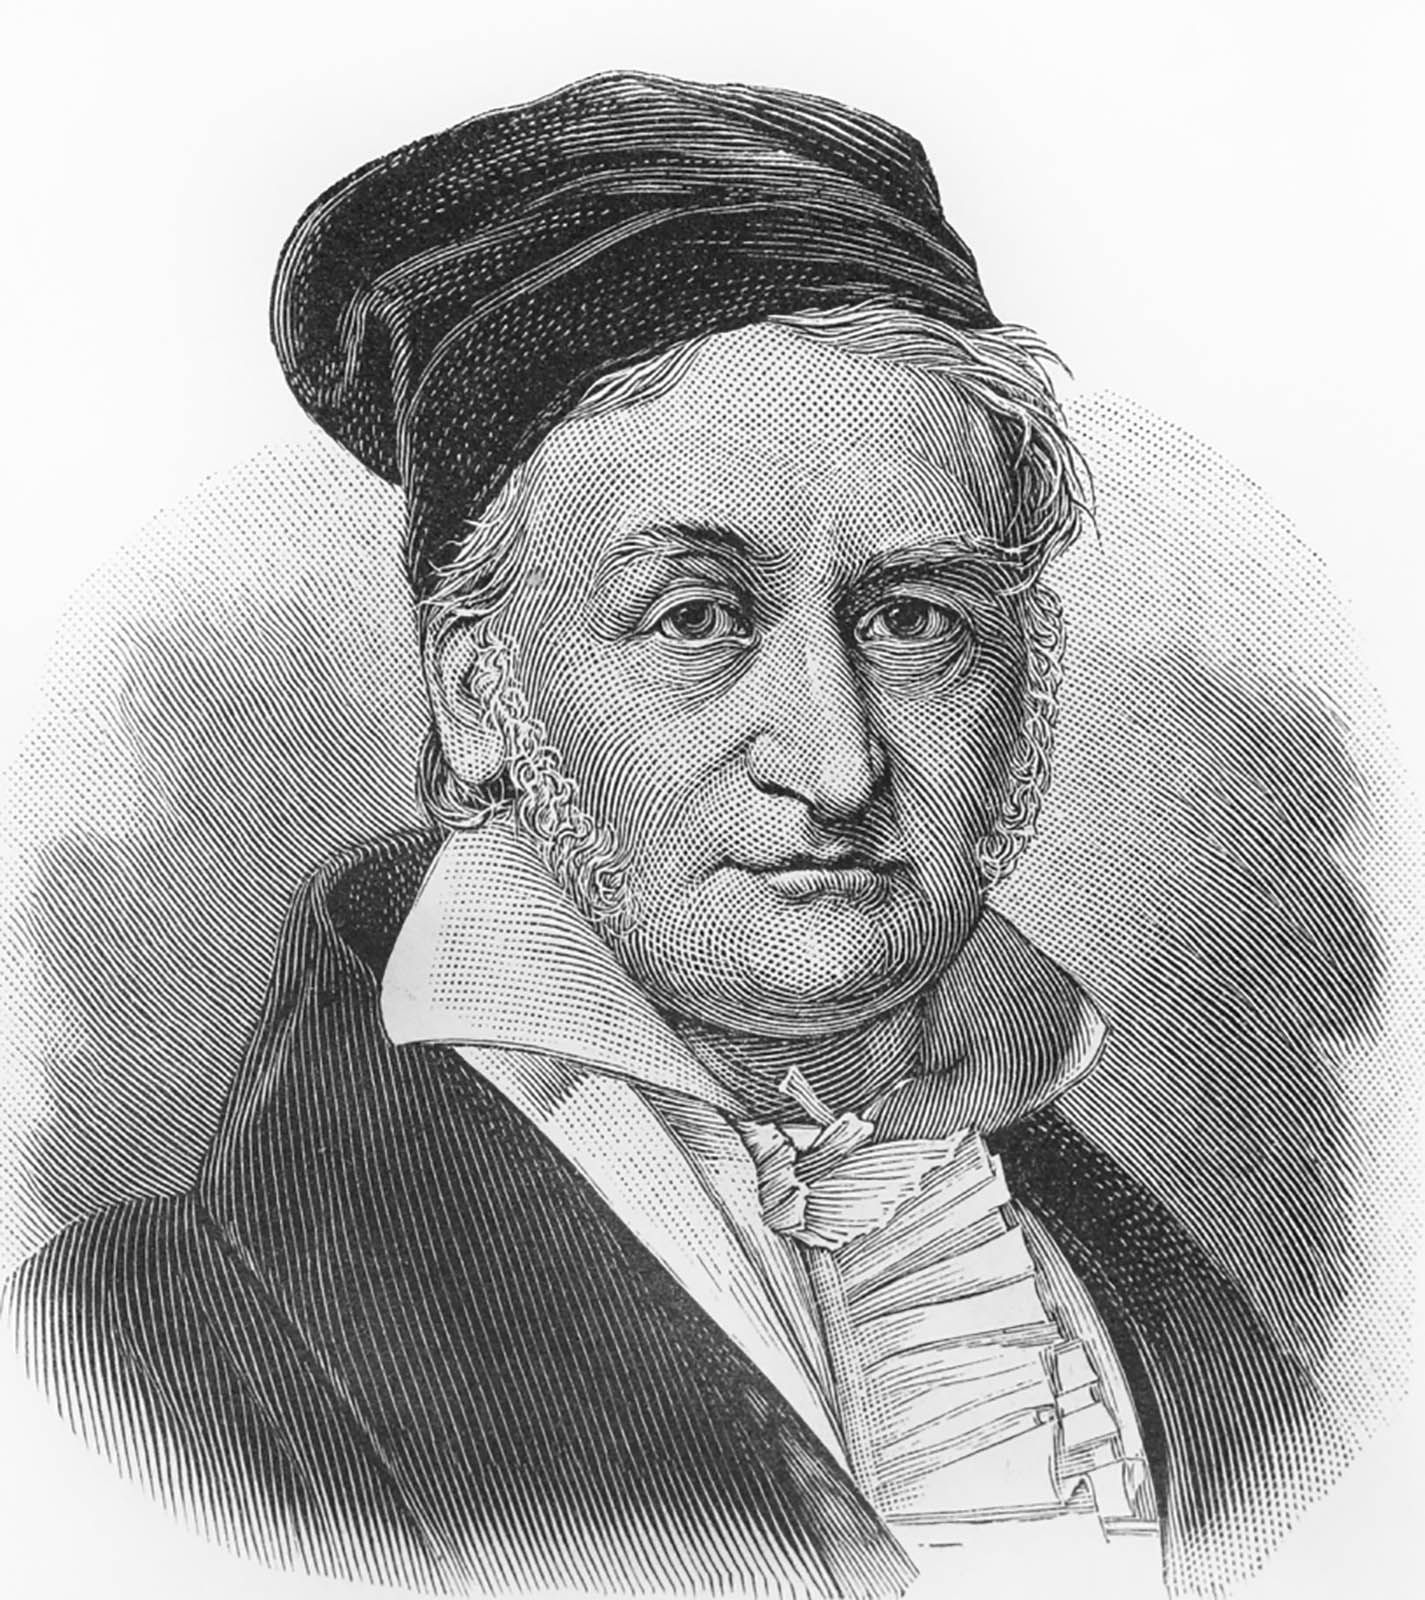  Carl Friedrich Gaussen biografia